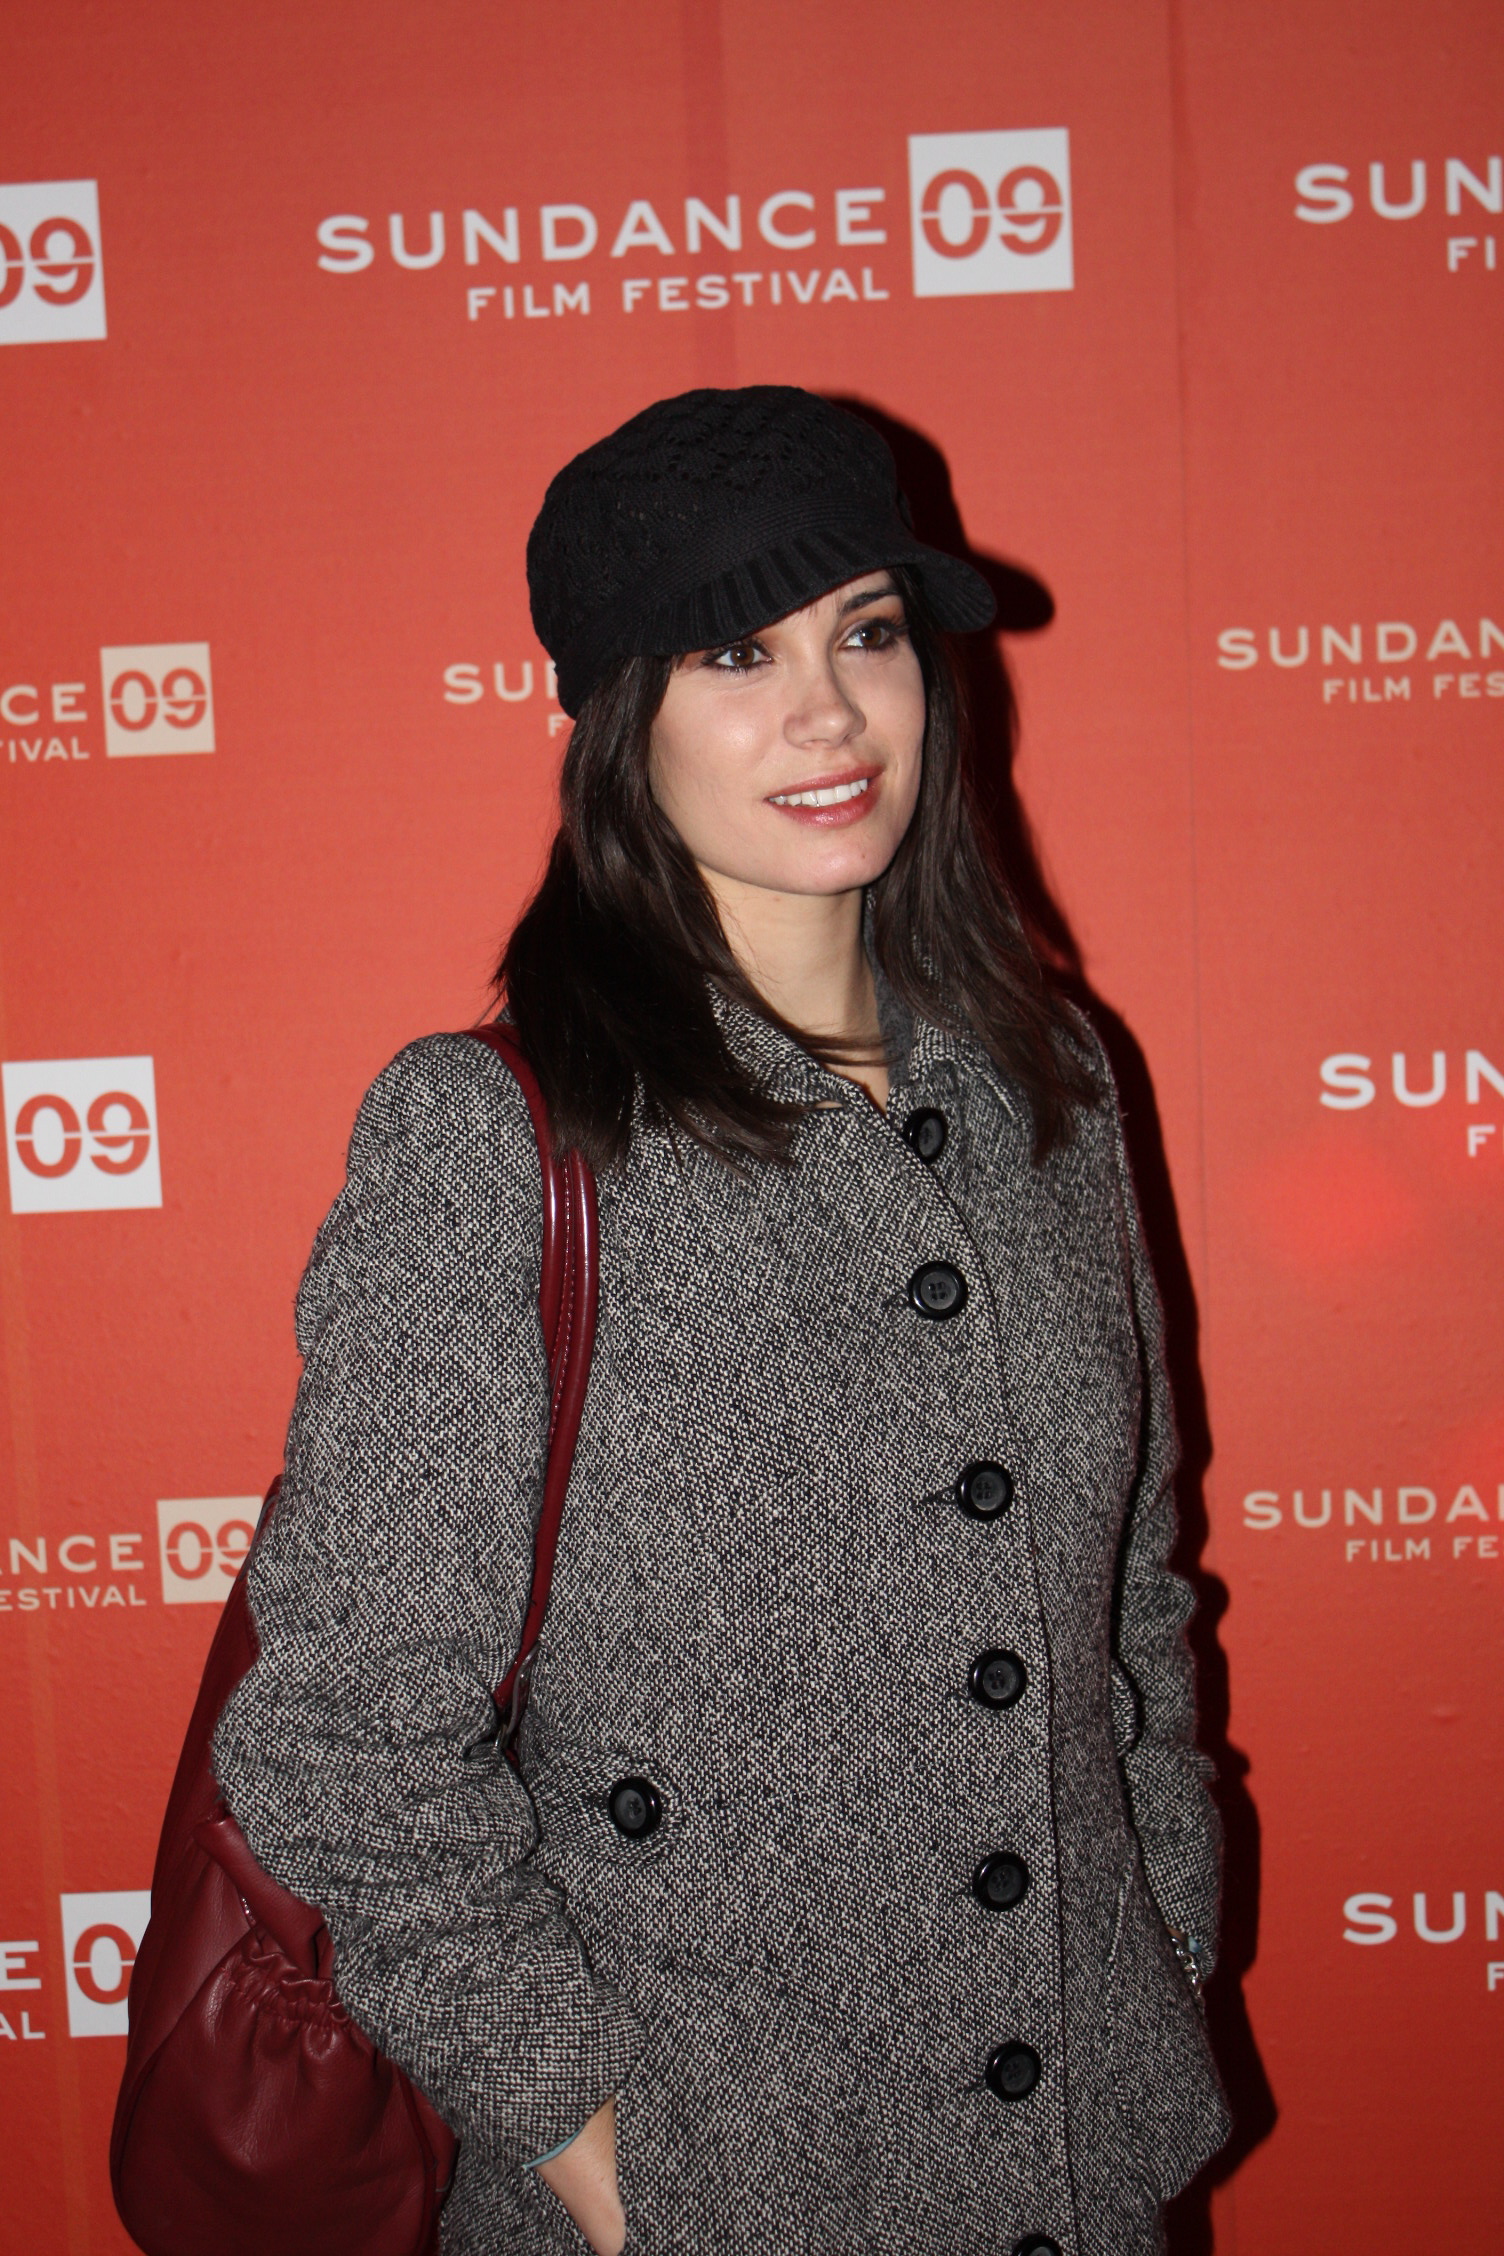 Amiee Conn at the Sundance Film Festival - Park City, Utah. Jan. 2009